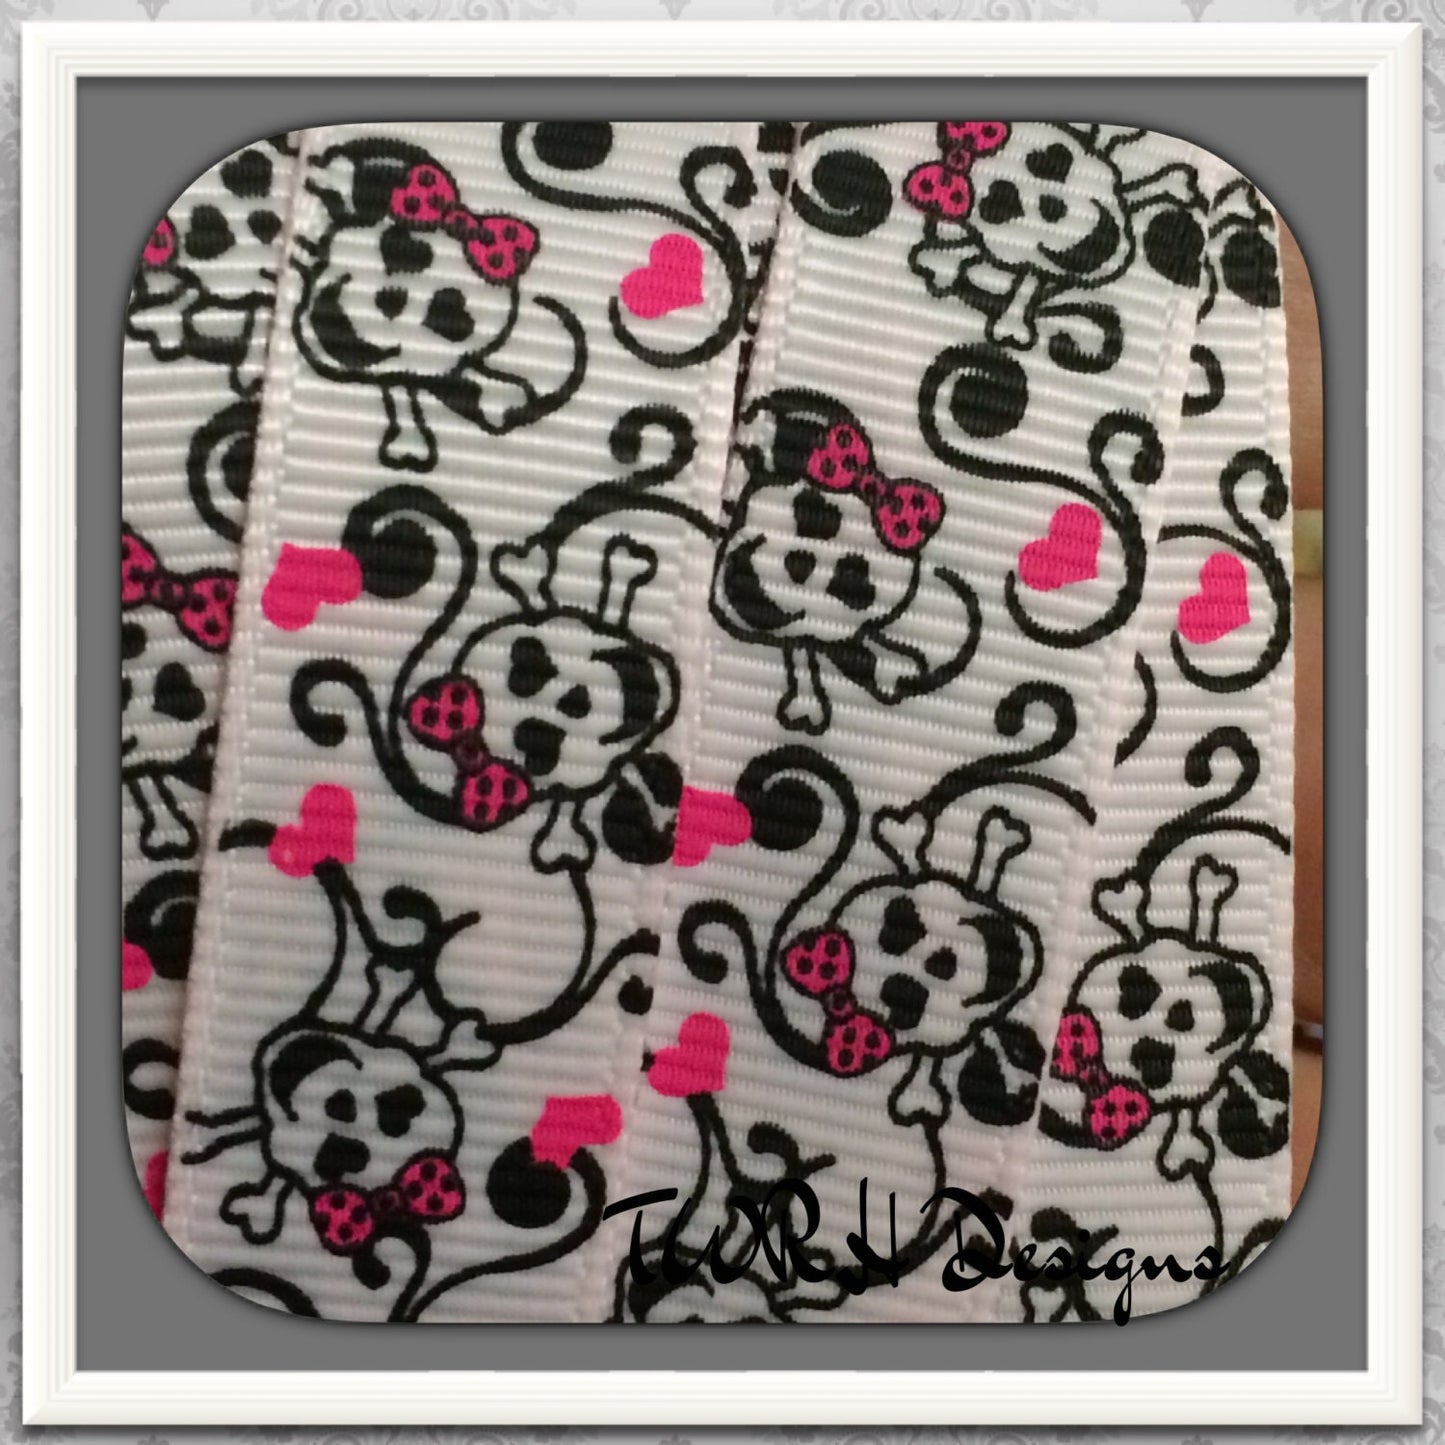 Beauty Skulls with hearts & scrolls on light pink 5/8" grosgrain ribbon 5 Yards- TWRH